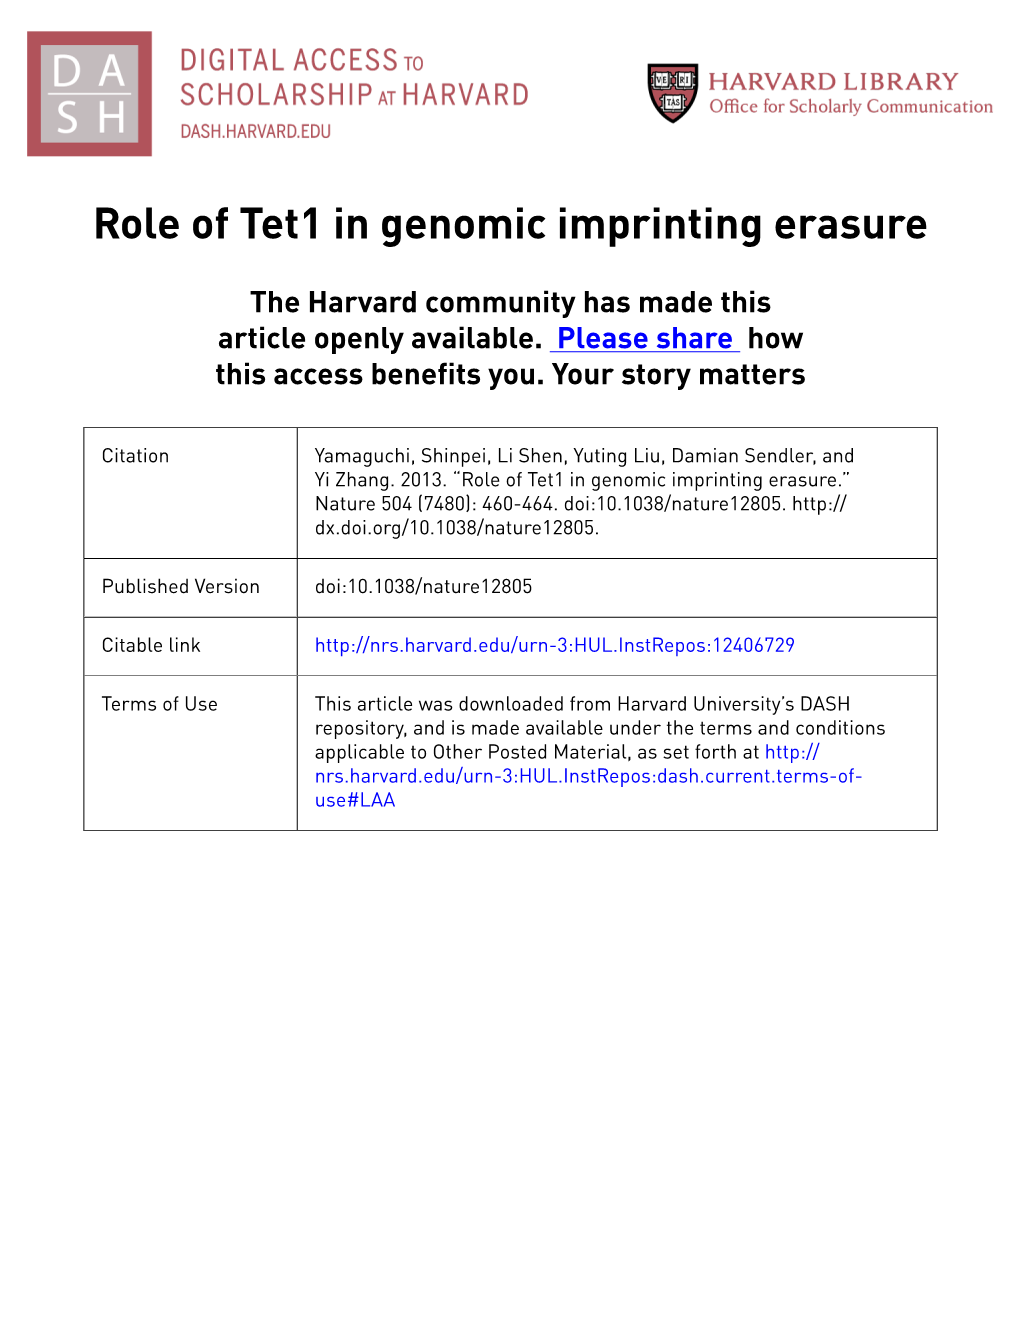 Role of Tet1 in Genomic Imprinting Erasure